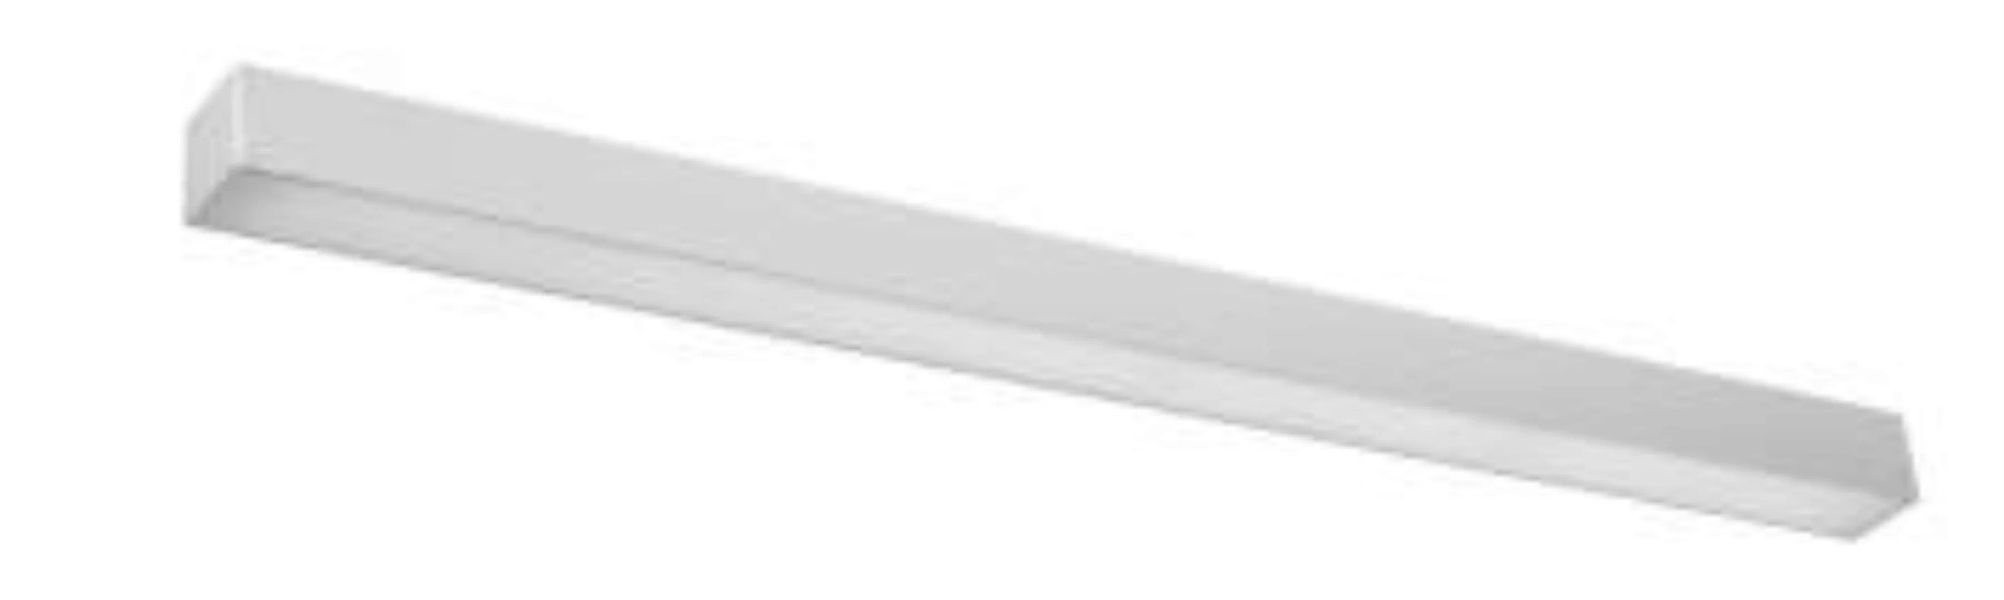 LED Wandlampe Metall 90 cm länglich Grau 4000 K 3120 lm günstig online kaufen